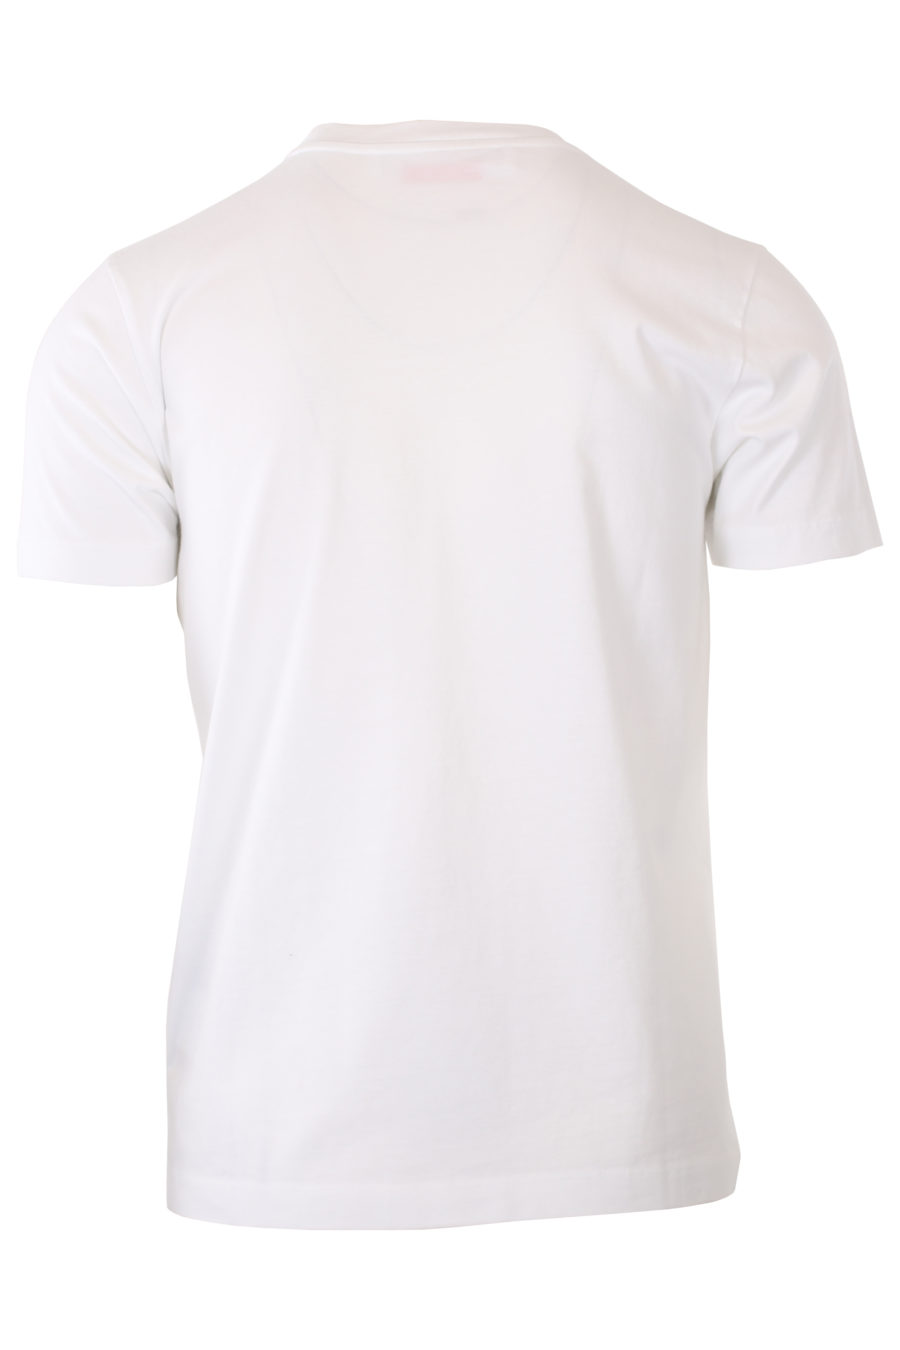 T-shirt blanc avec petit logo en noir - IMG 2341